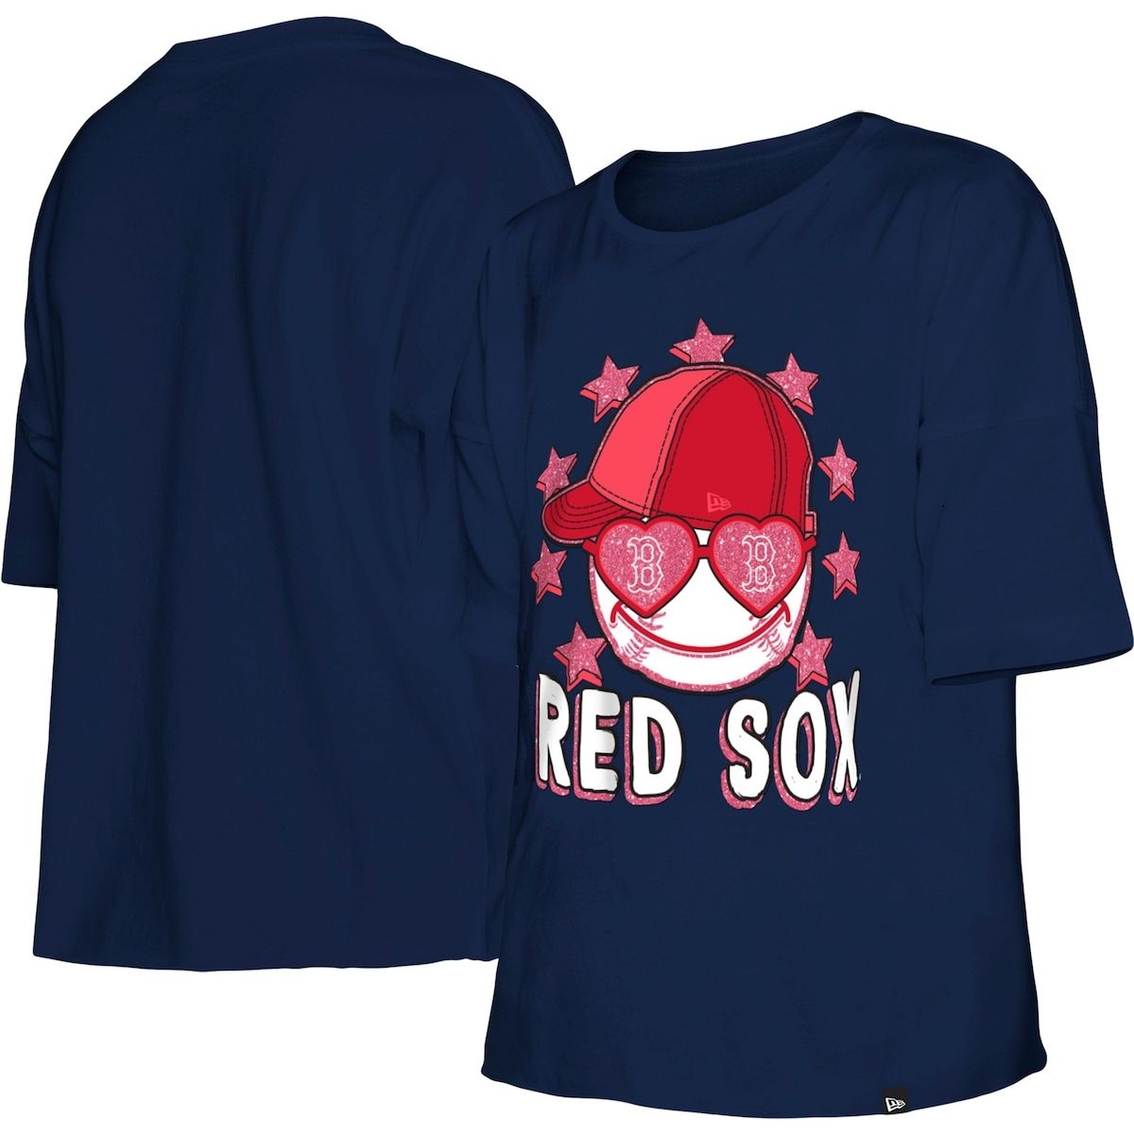 New Era Girls Youth Navy Boston Red Sox Team Half Sleeve T-Shirt - Image 1 of 4